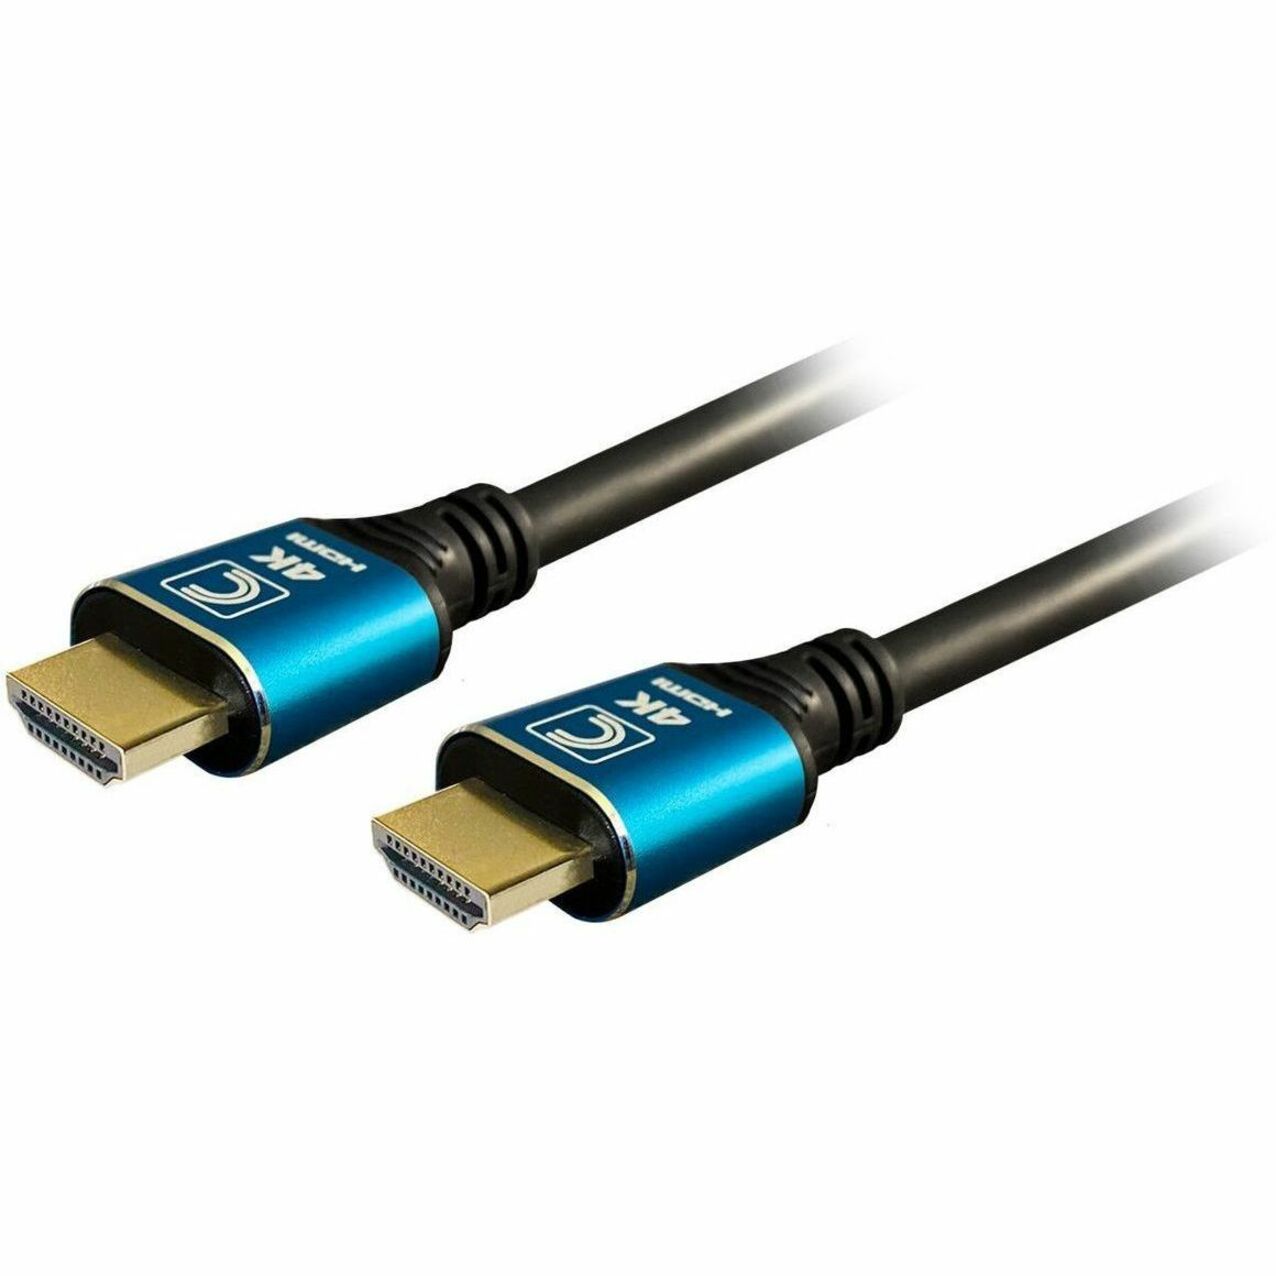 Comprehensive HD-4K-15SP Pro AV/IT Specialist Series High Speed 4K60 HDMI Cable 15ft, 18 Gbit/s, Jet Black